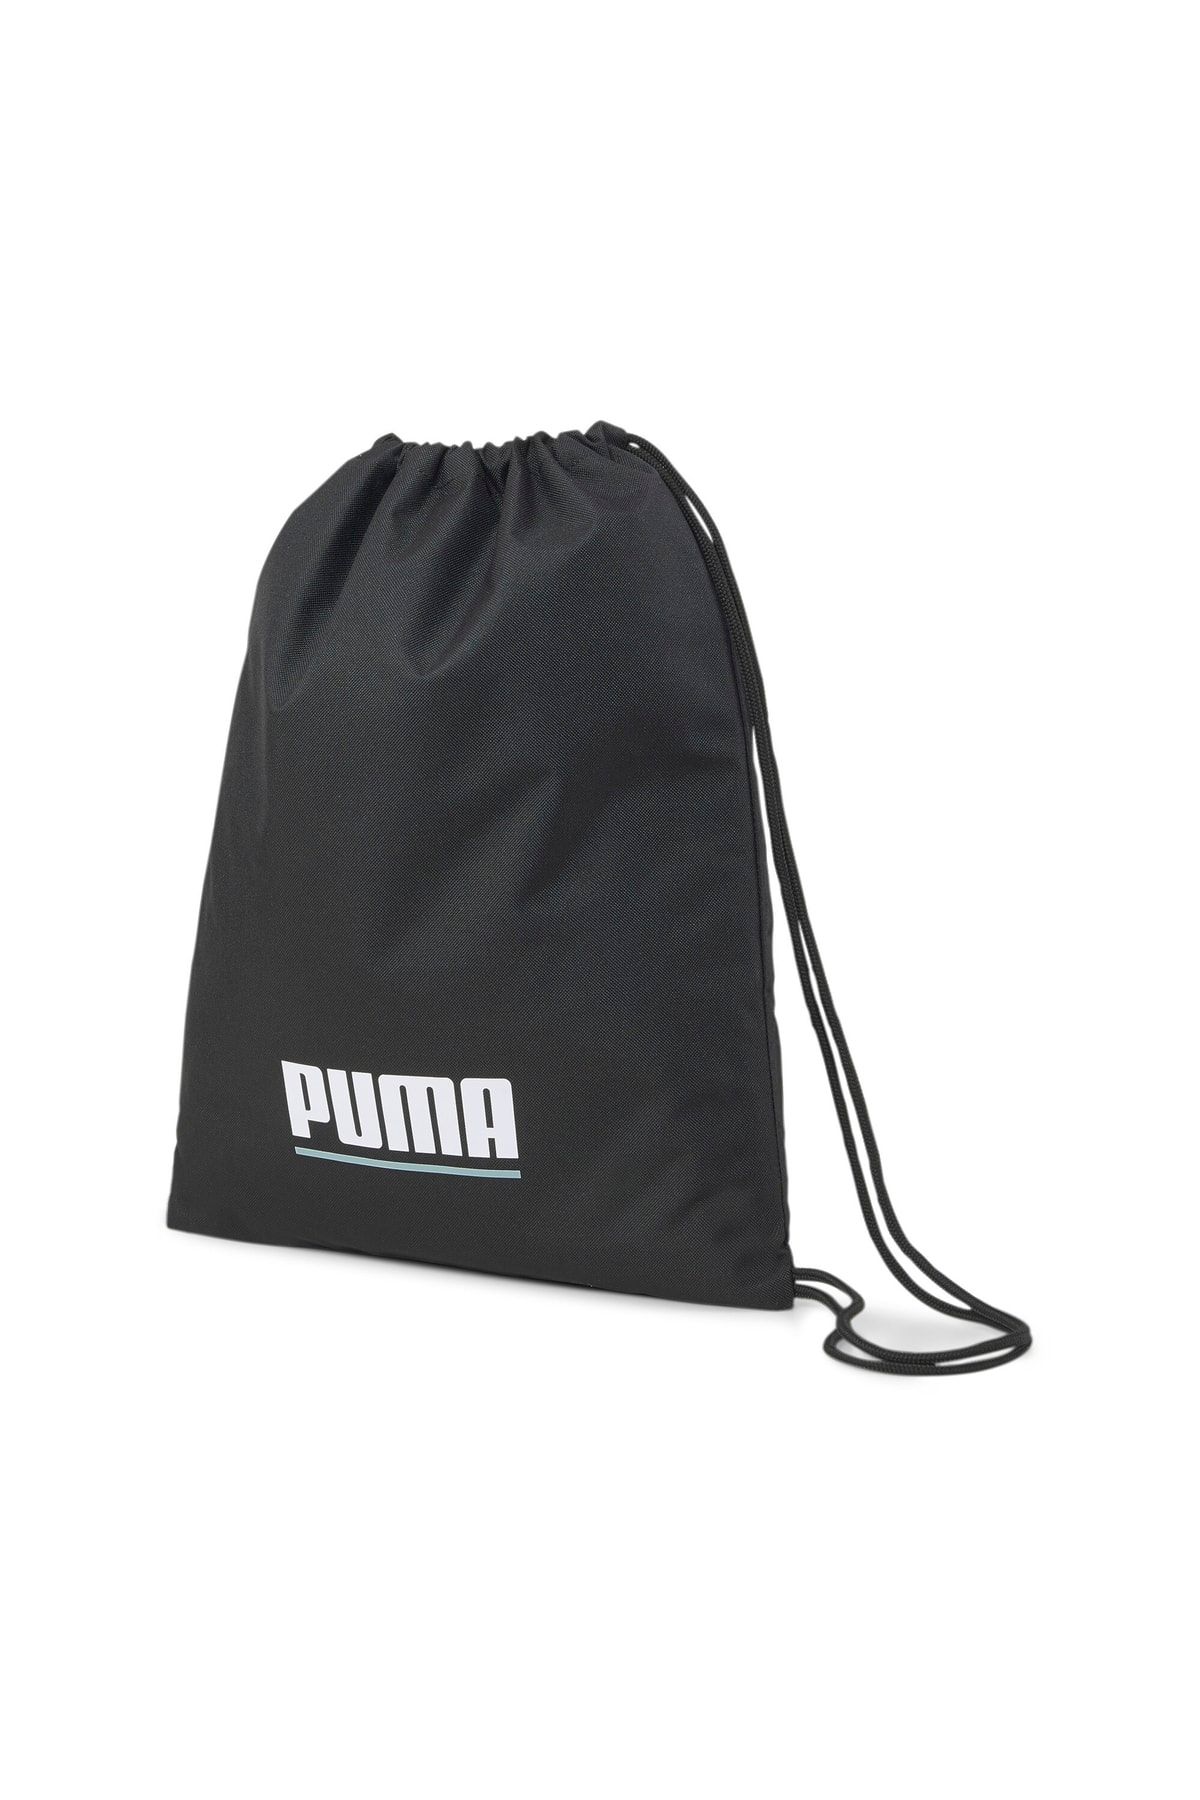 Puma Plus Gym Sack - Büzgülü Siyah Spor Çanta